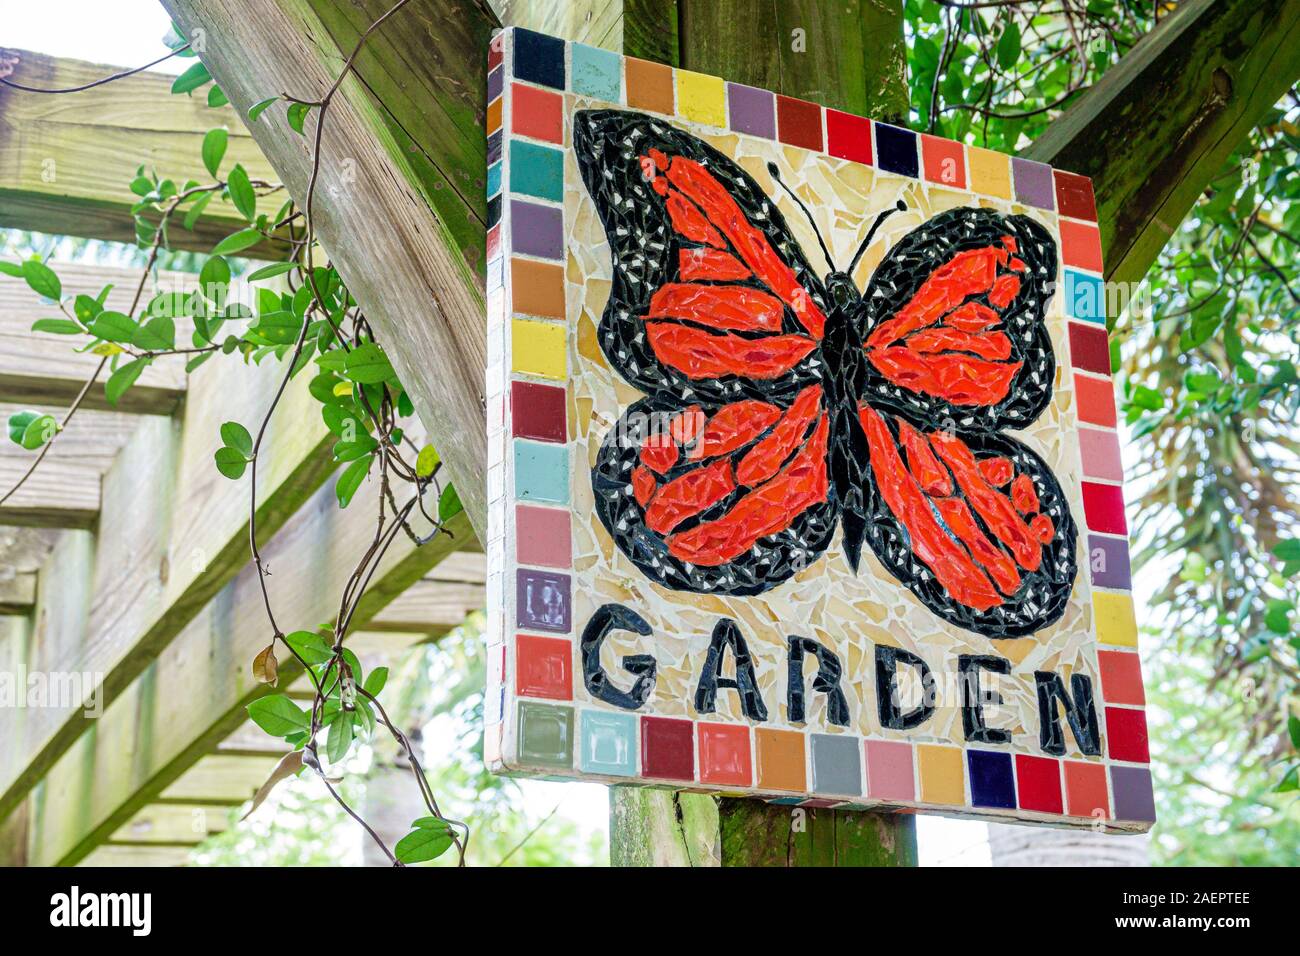 Port St. Saint Lucie Florida,Port St. Lucie Botanical Gardens,tile mosaic,butterfly garden,arbor,FL190920024 Stock Photo